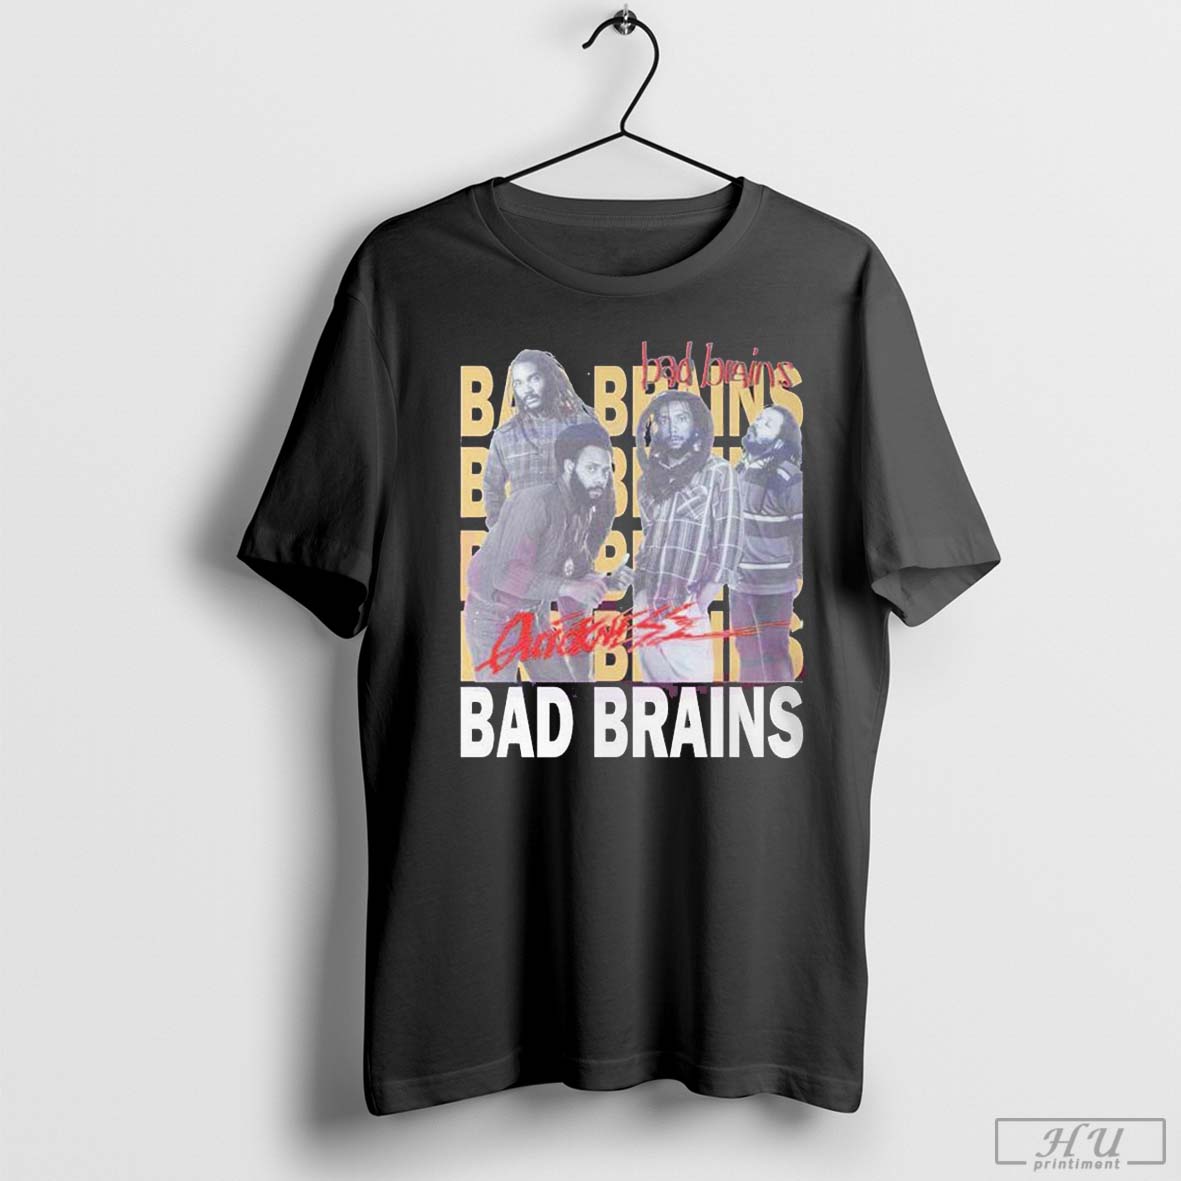 https://printiment.com/wp-content/uploads/2023/02/Bad-Brains-Quickness-Shirt-.jpg